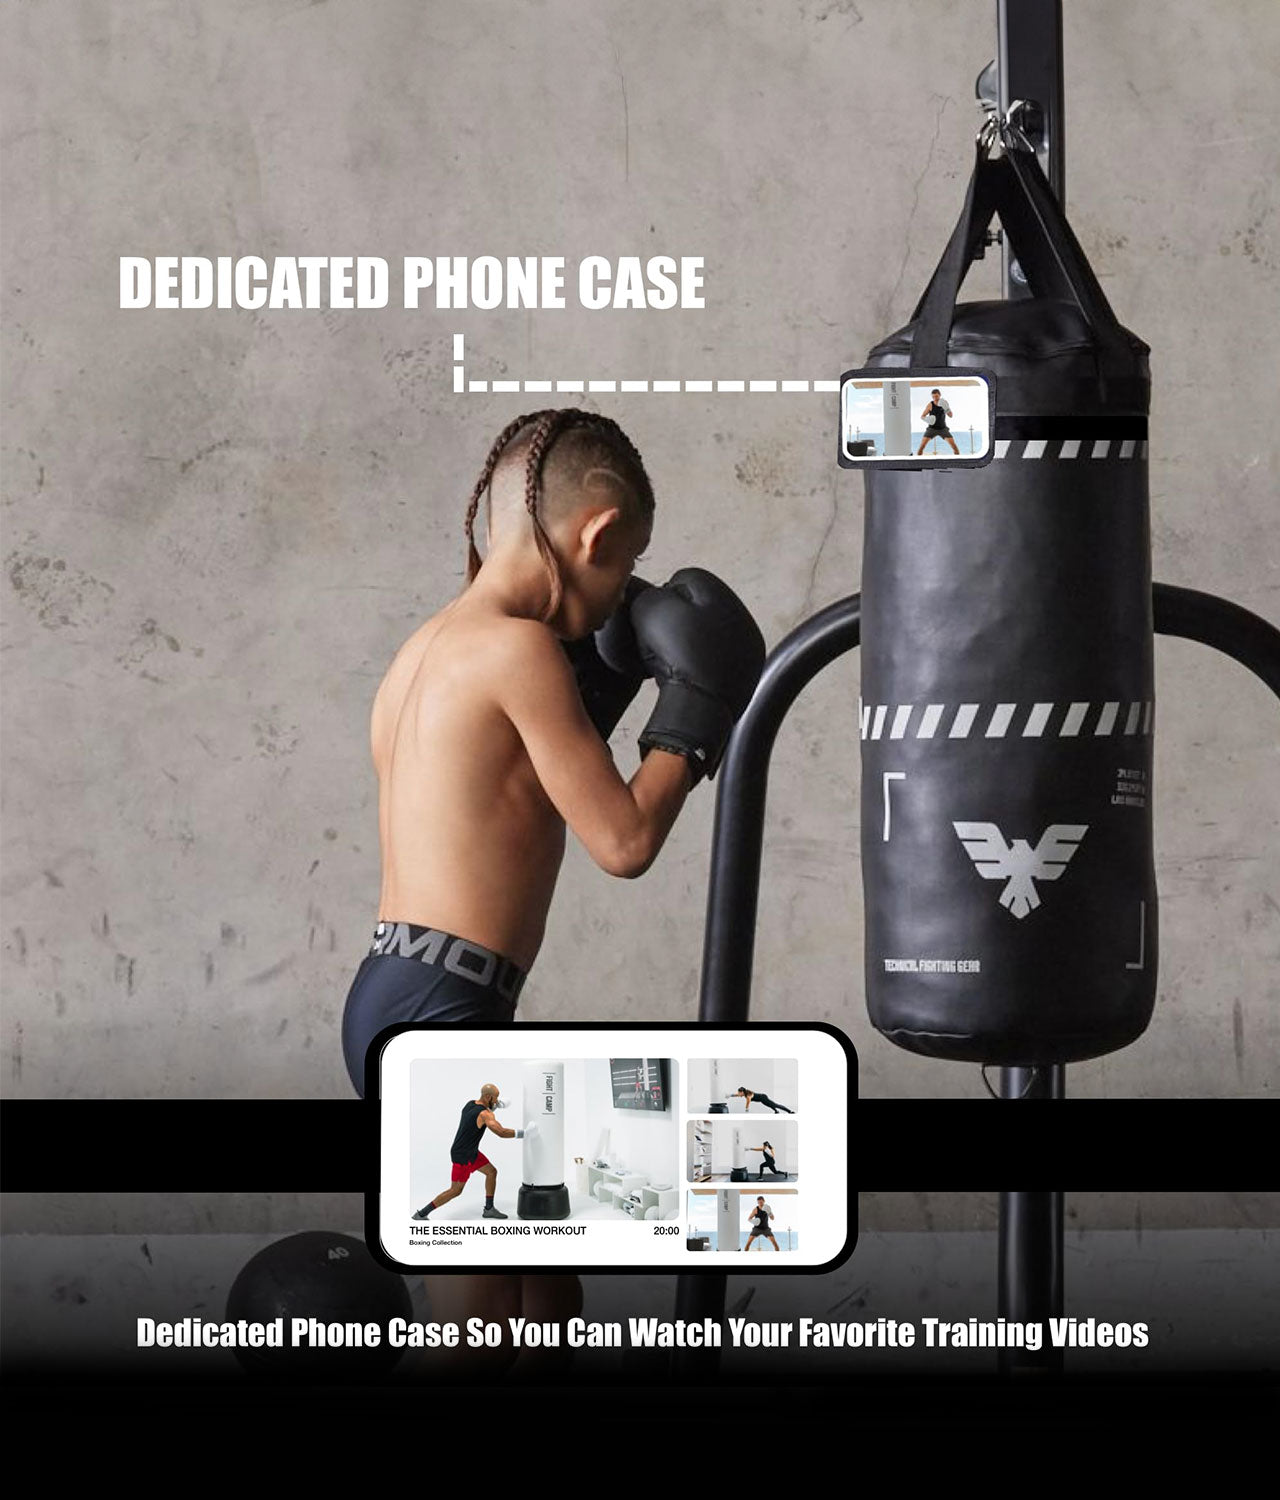 Elite Sports Kids 2.5 ft Essential Boxing Punching Bag Set Dedicated Phone Case